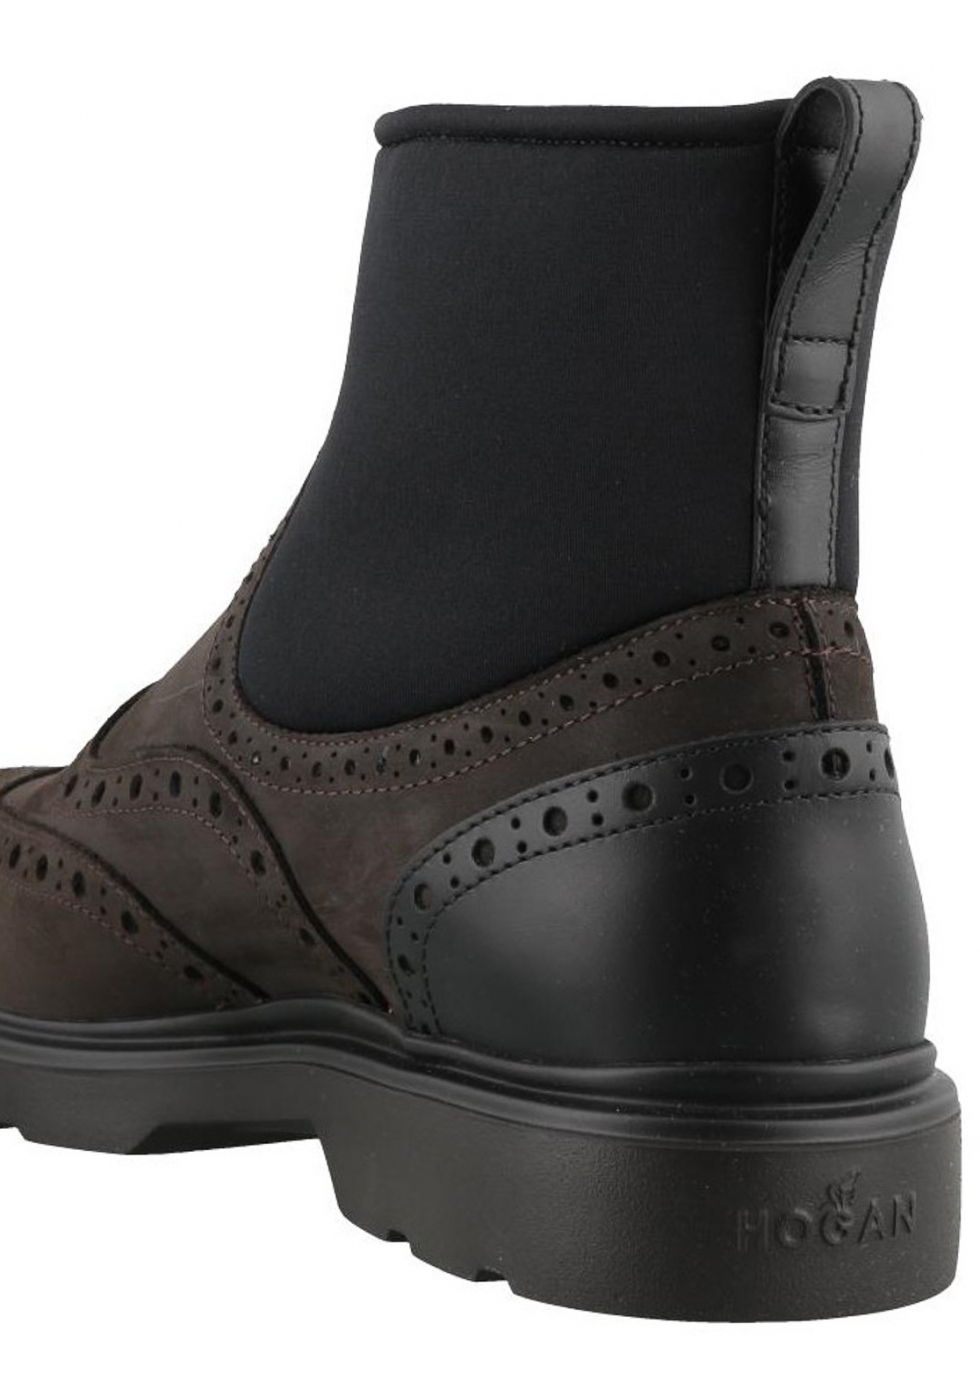 Hogan Men's fashion round toe laceless chukka boots in brown nubuck